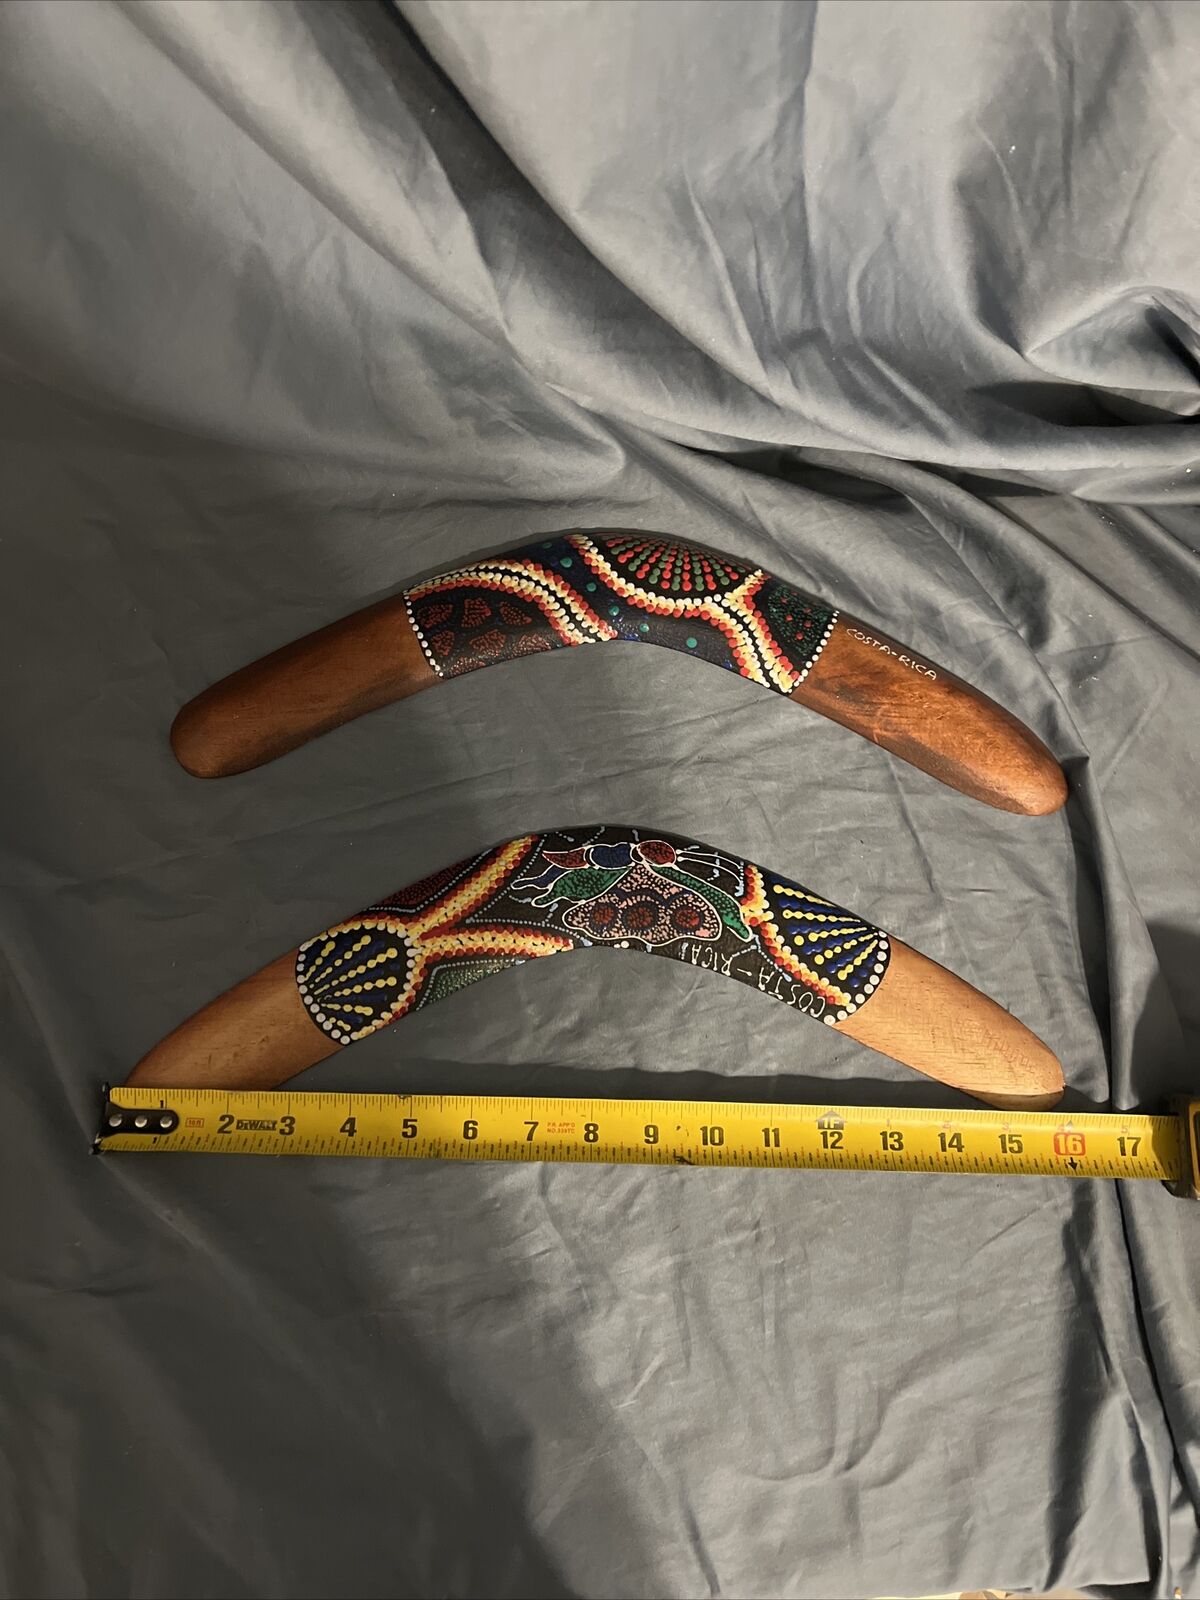 2 Genuine Boomerangs From Costa Rica 🇨🇷 Hand Painted Souvenir